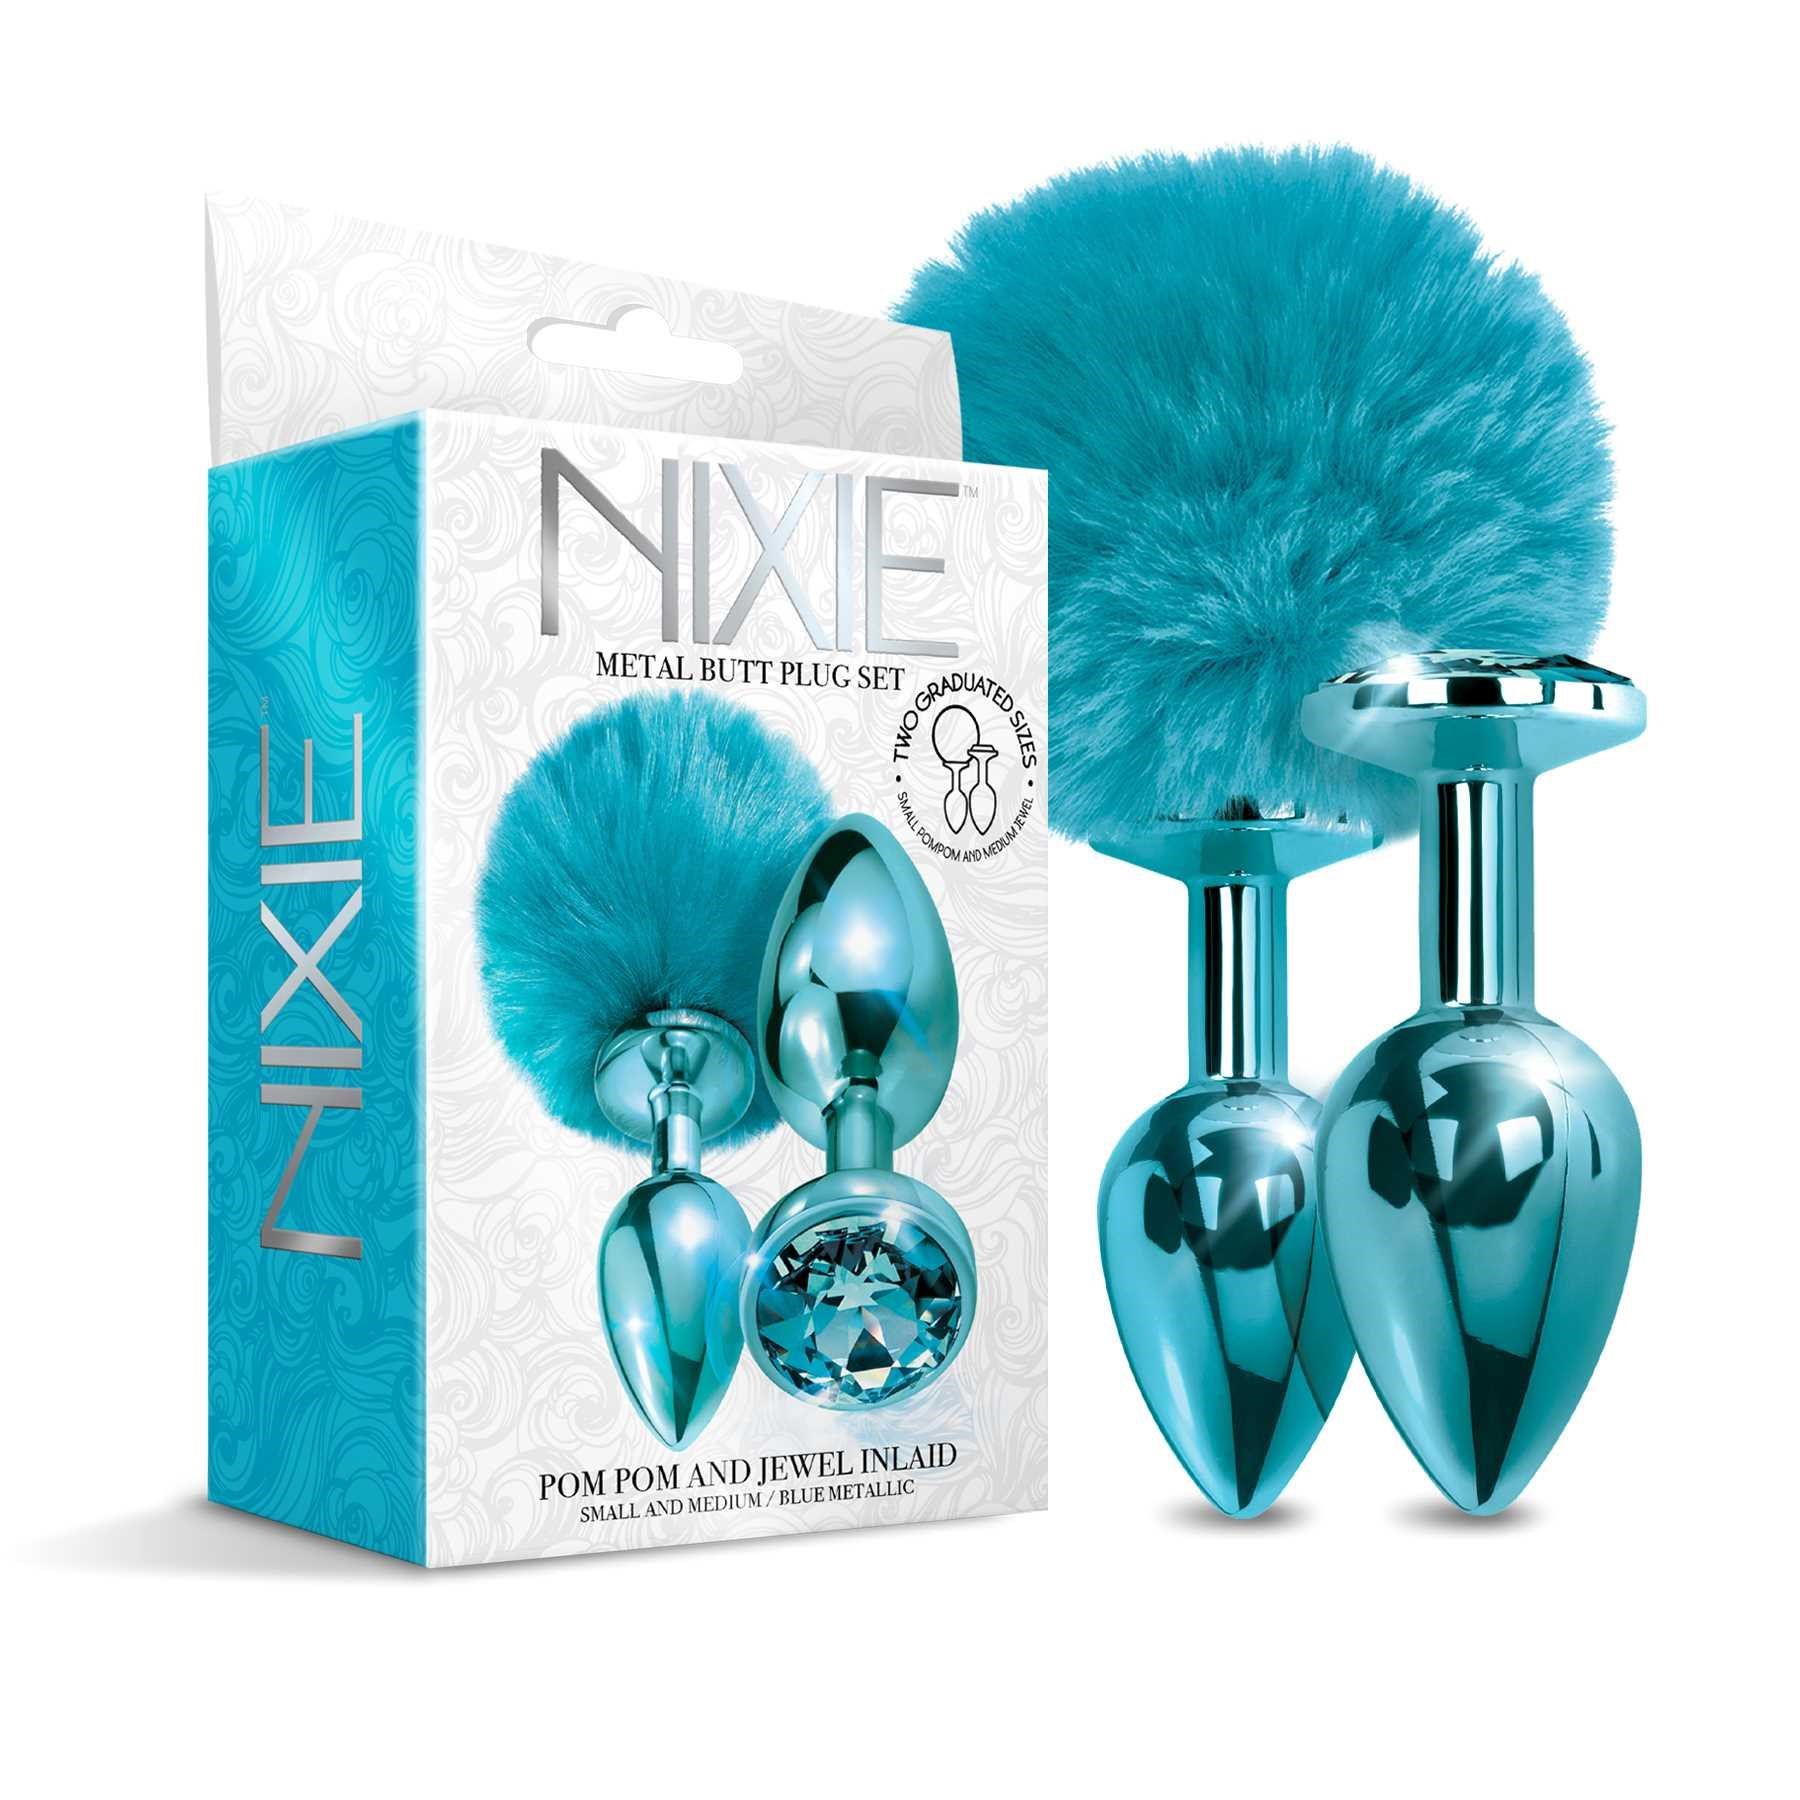 NIXIE Metal Butt Plug Set Pom Pom and Jewel Inlaid Metallic blue